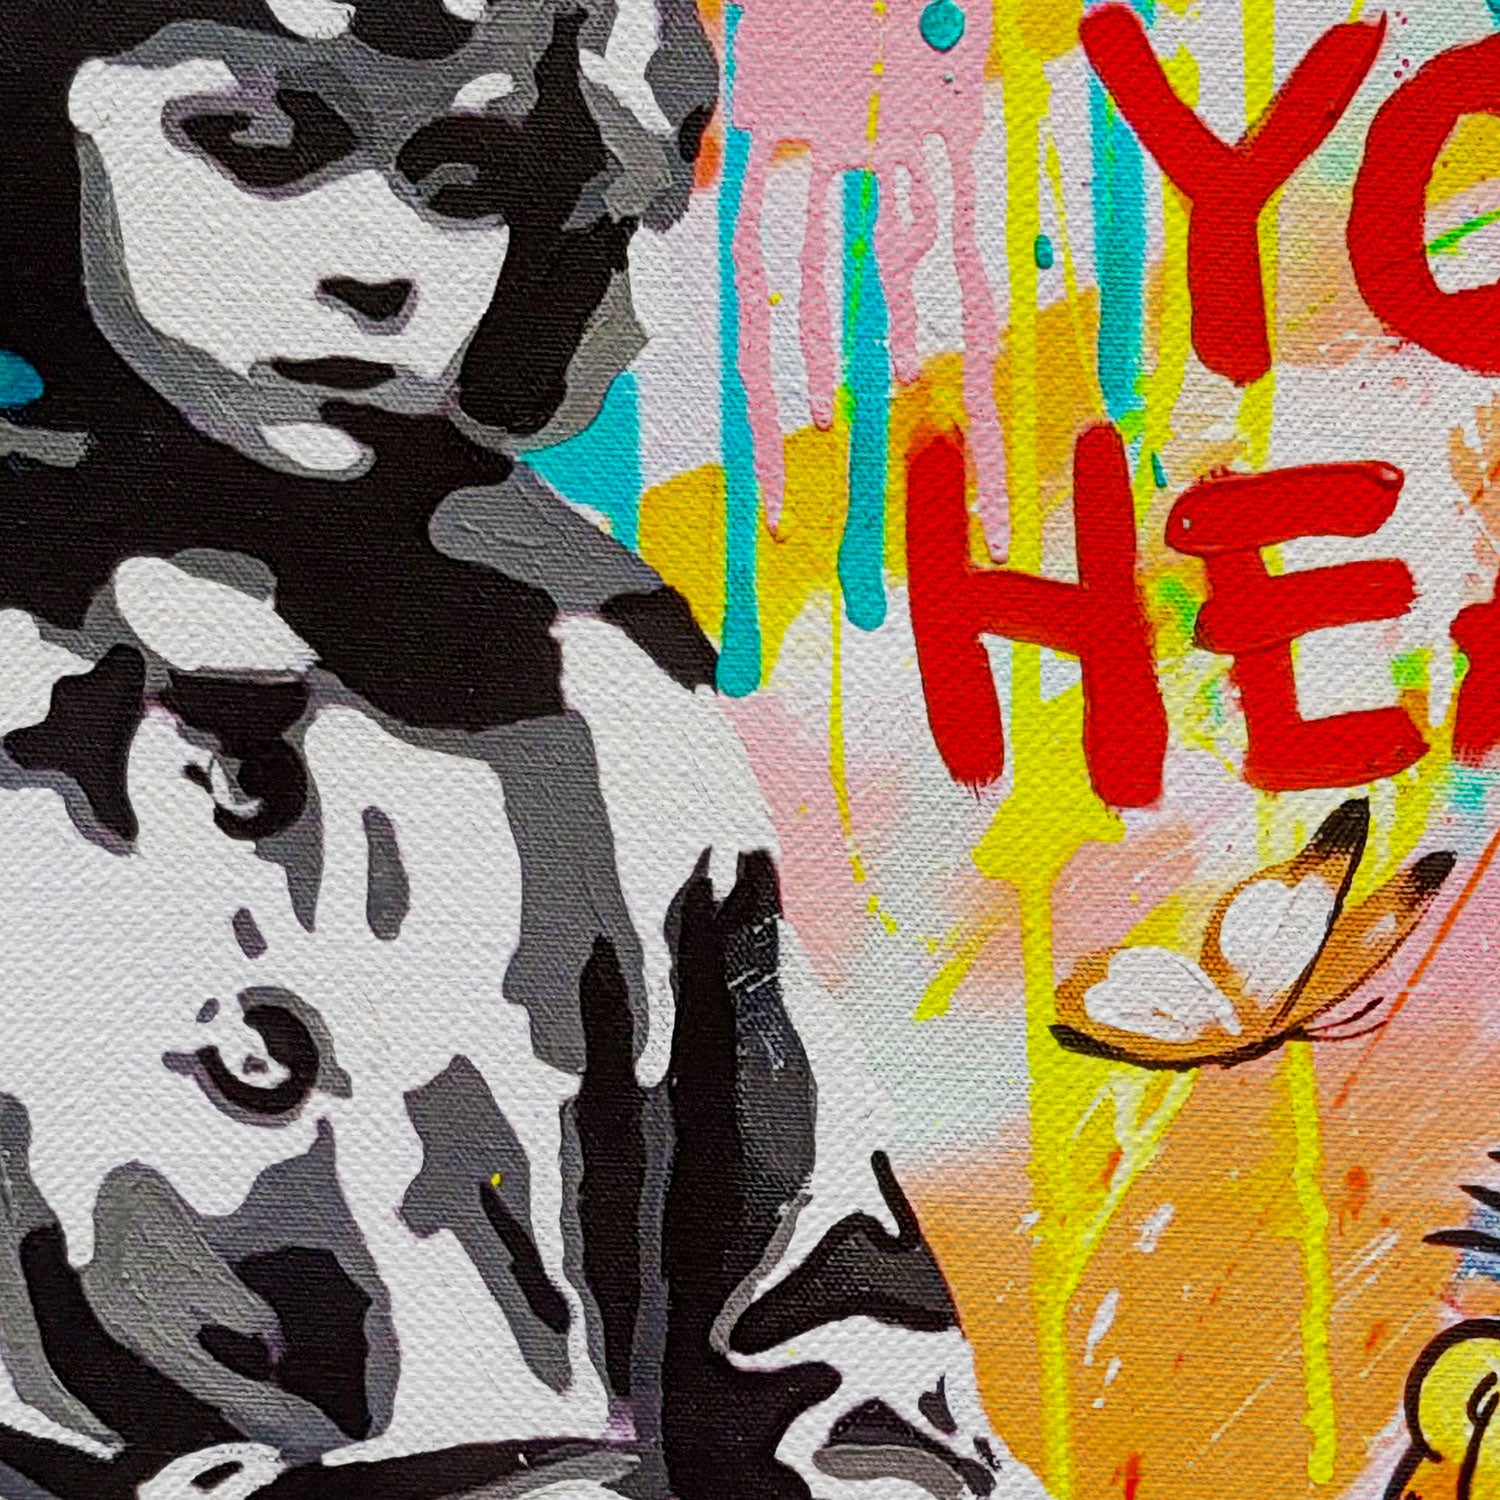 Banksy Girl Follow Your Heart Canvas Wall Art